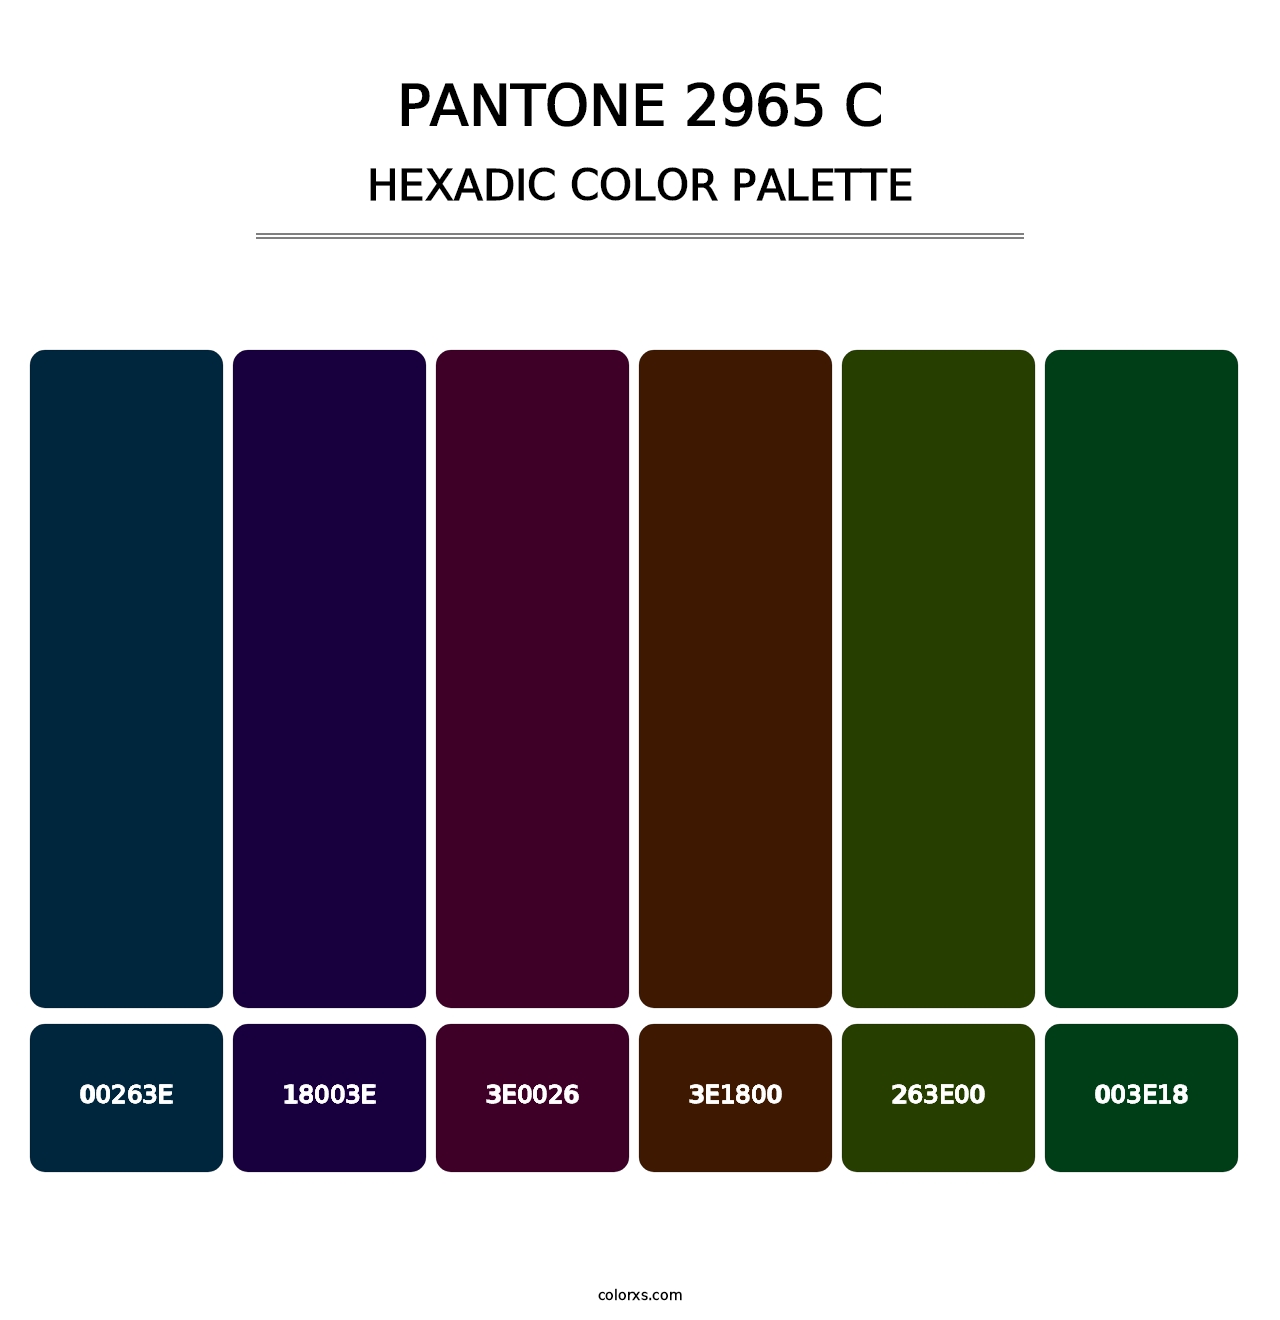 PANTONE 2965 C - Hexadic Color Palette